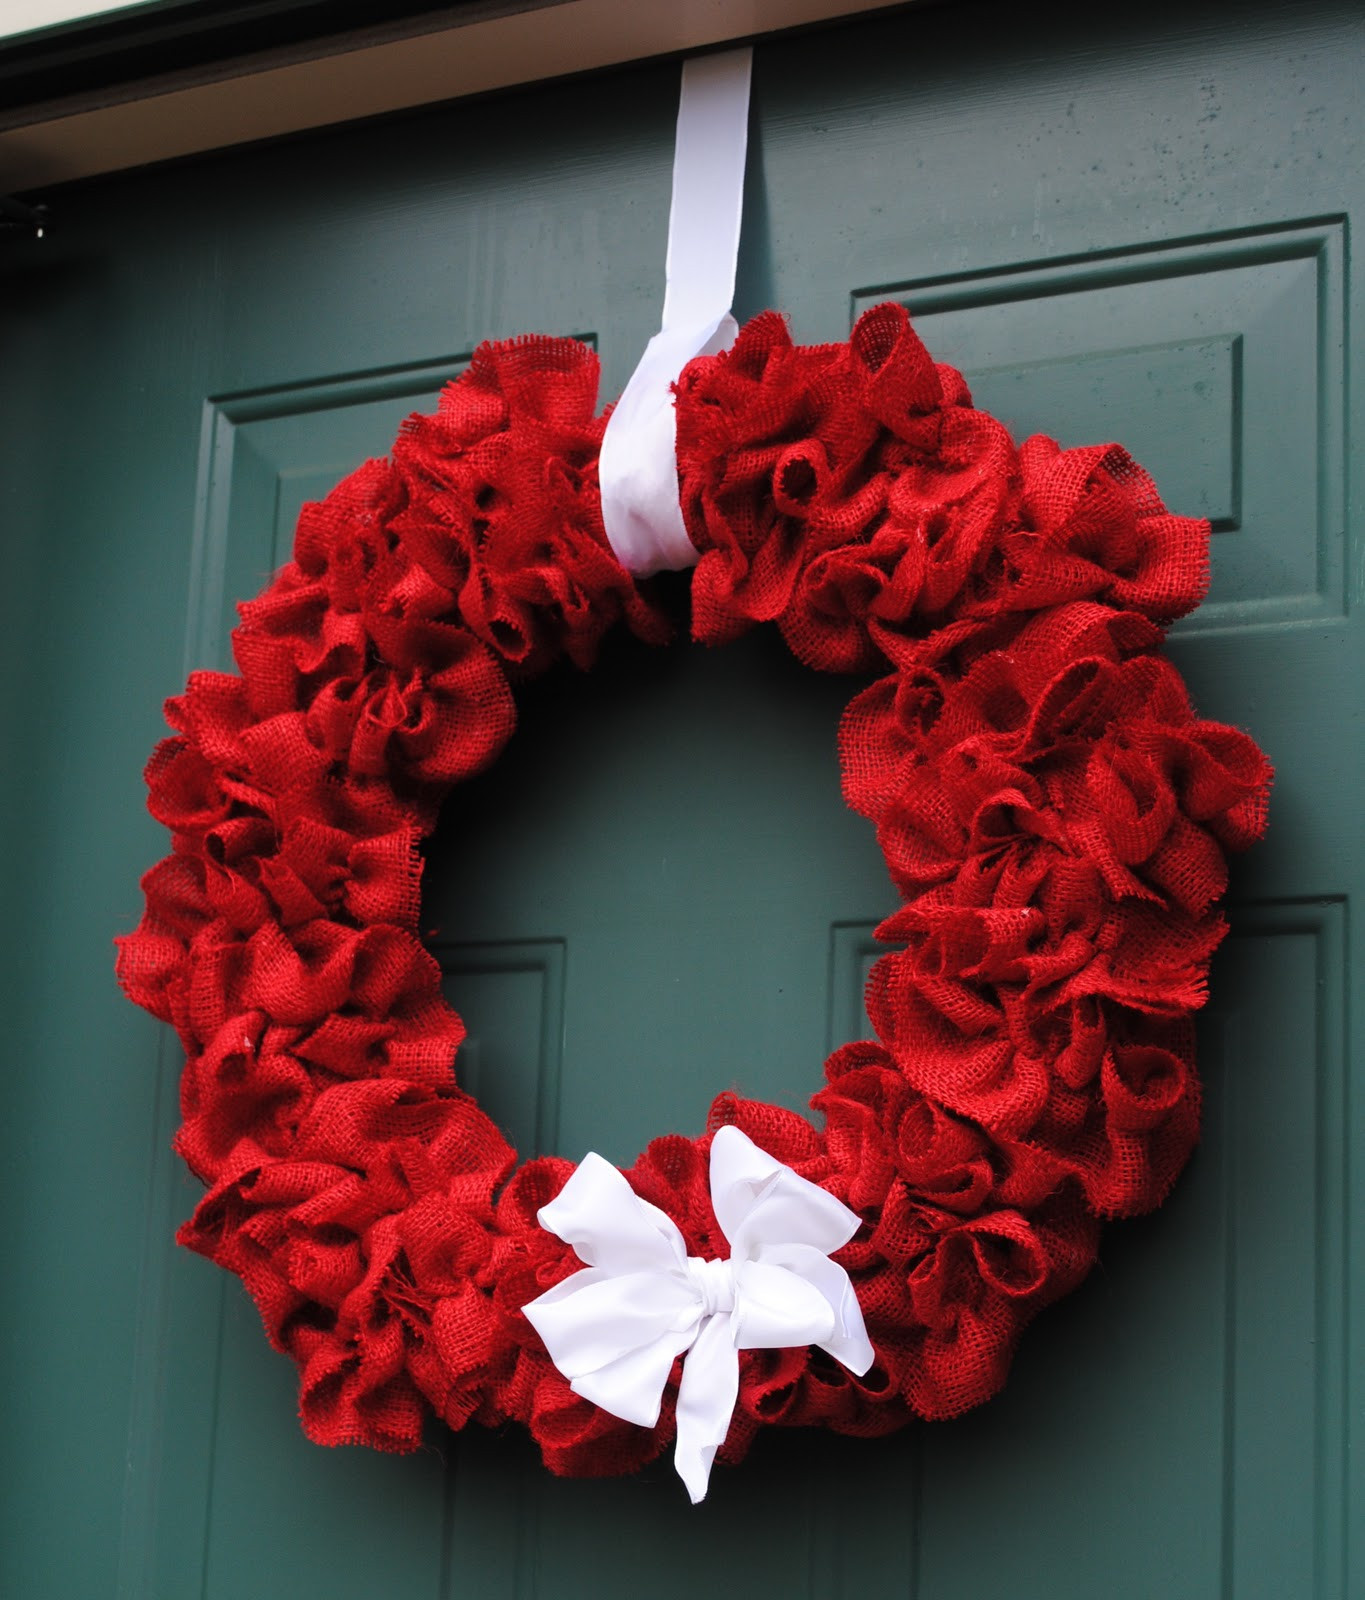 DIY Burlap Christmas Wreaths
 How to Make a Burlap Wreath 30 DIY Tutorials